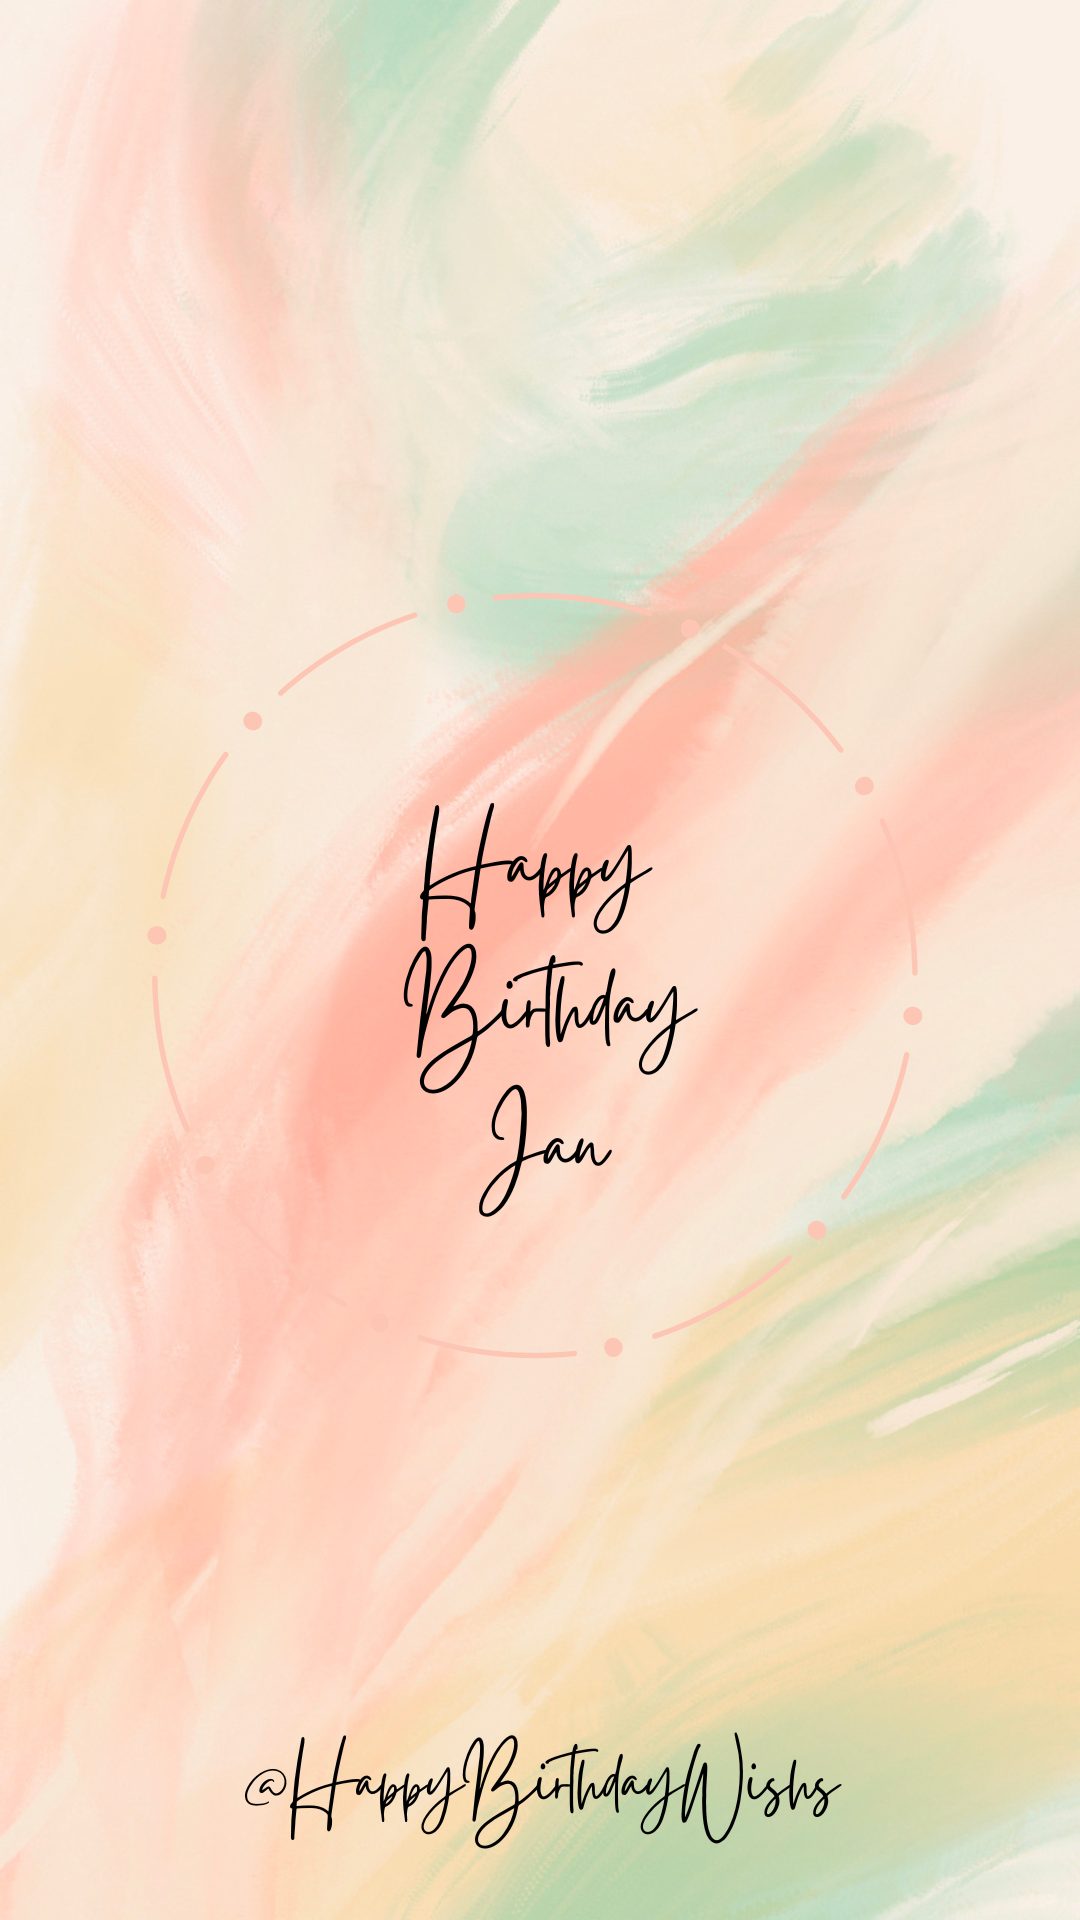 Happy Birthday wishes for Jan